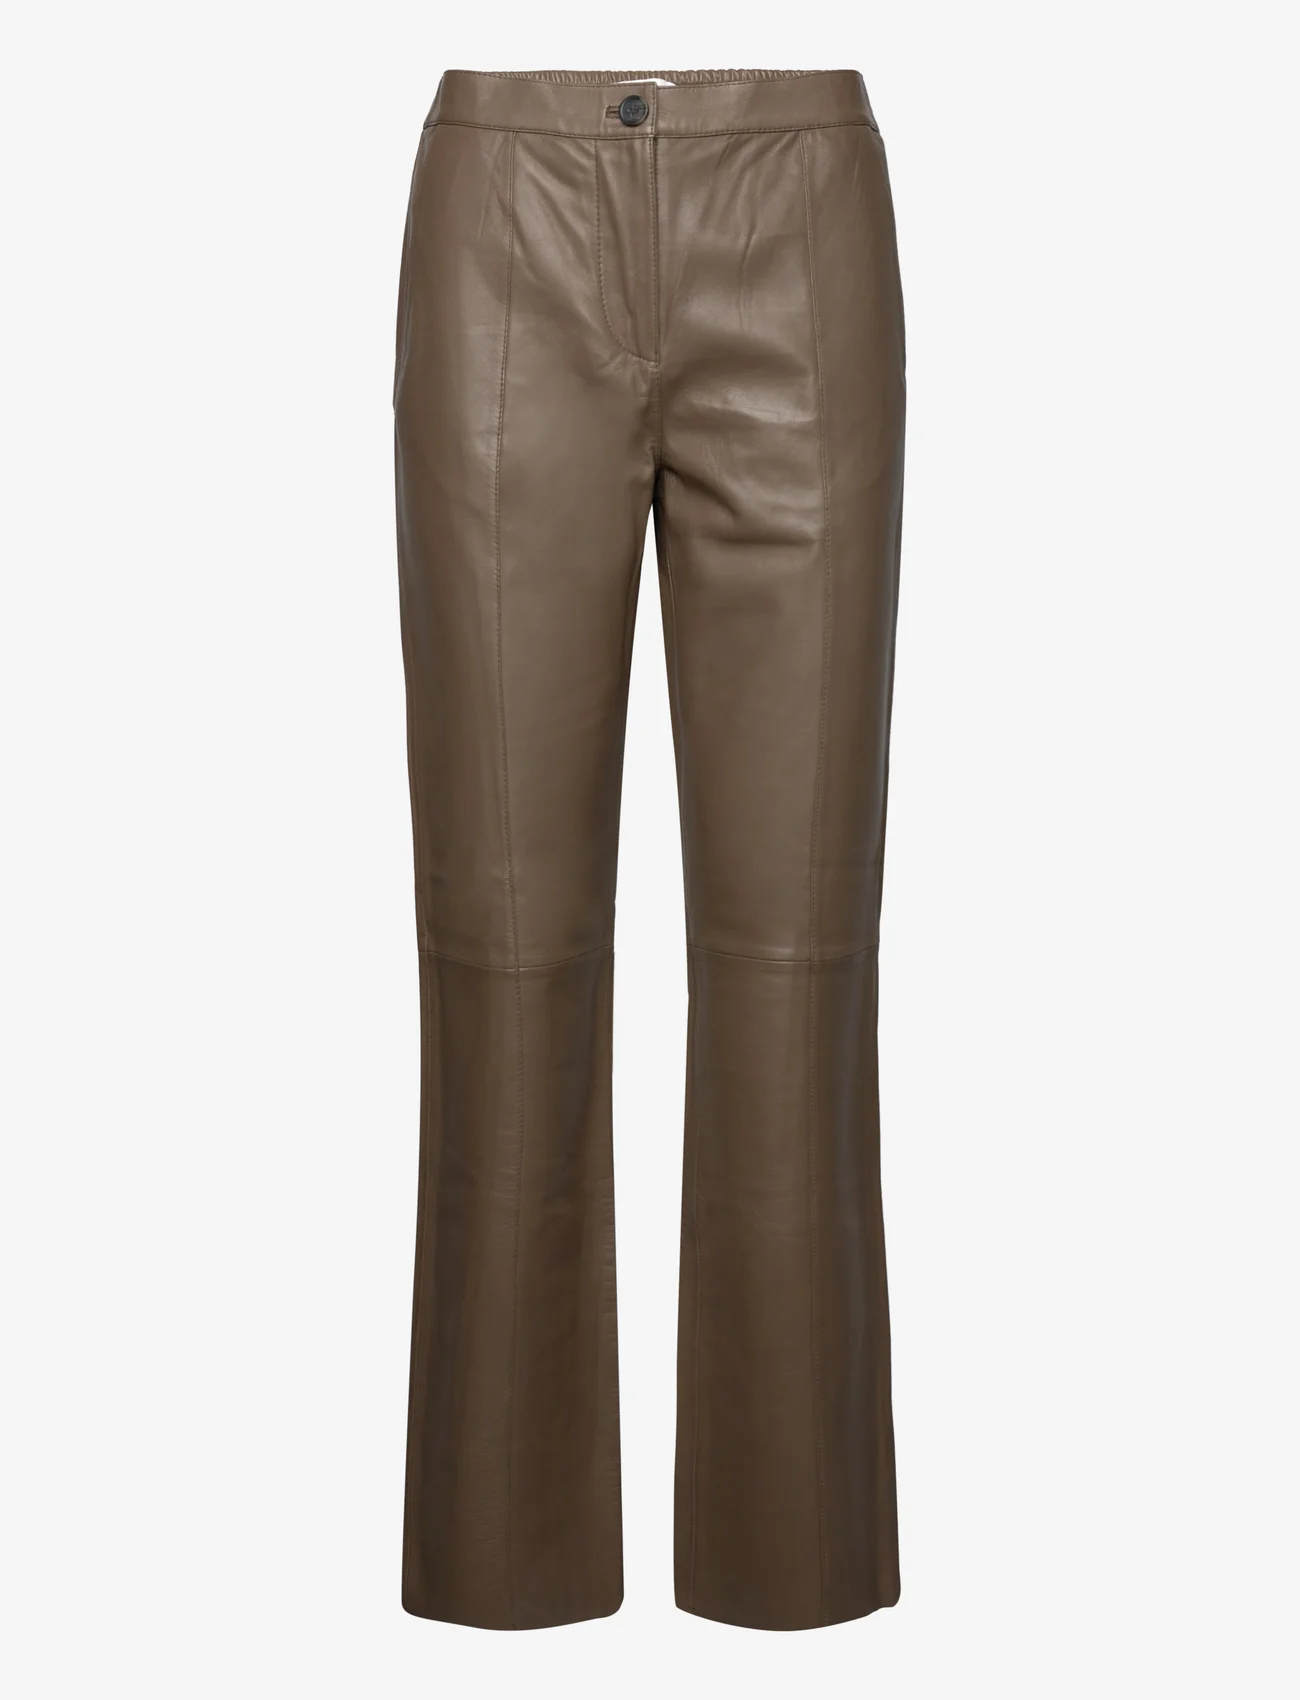 Rosemunde - Leather trousers - dark portobello brown - 0